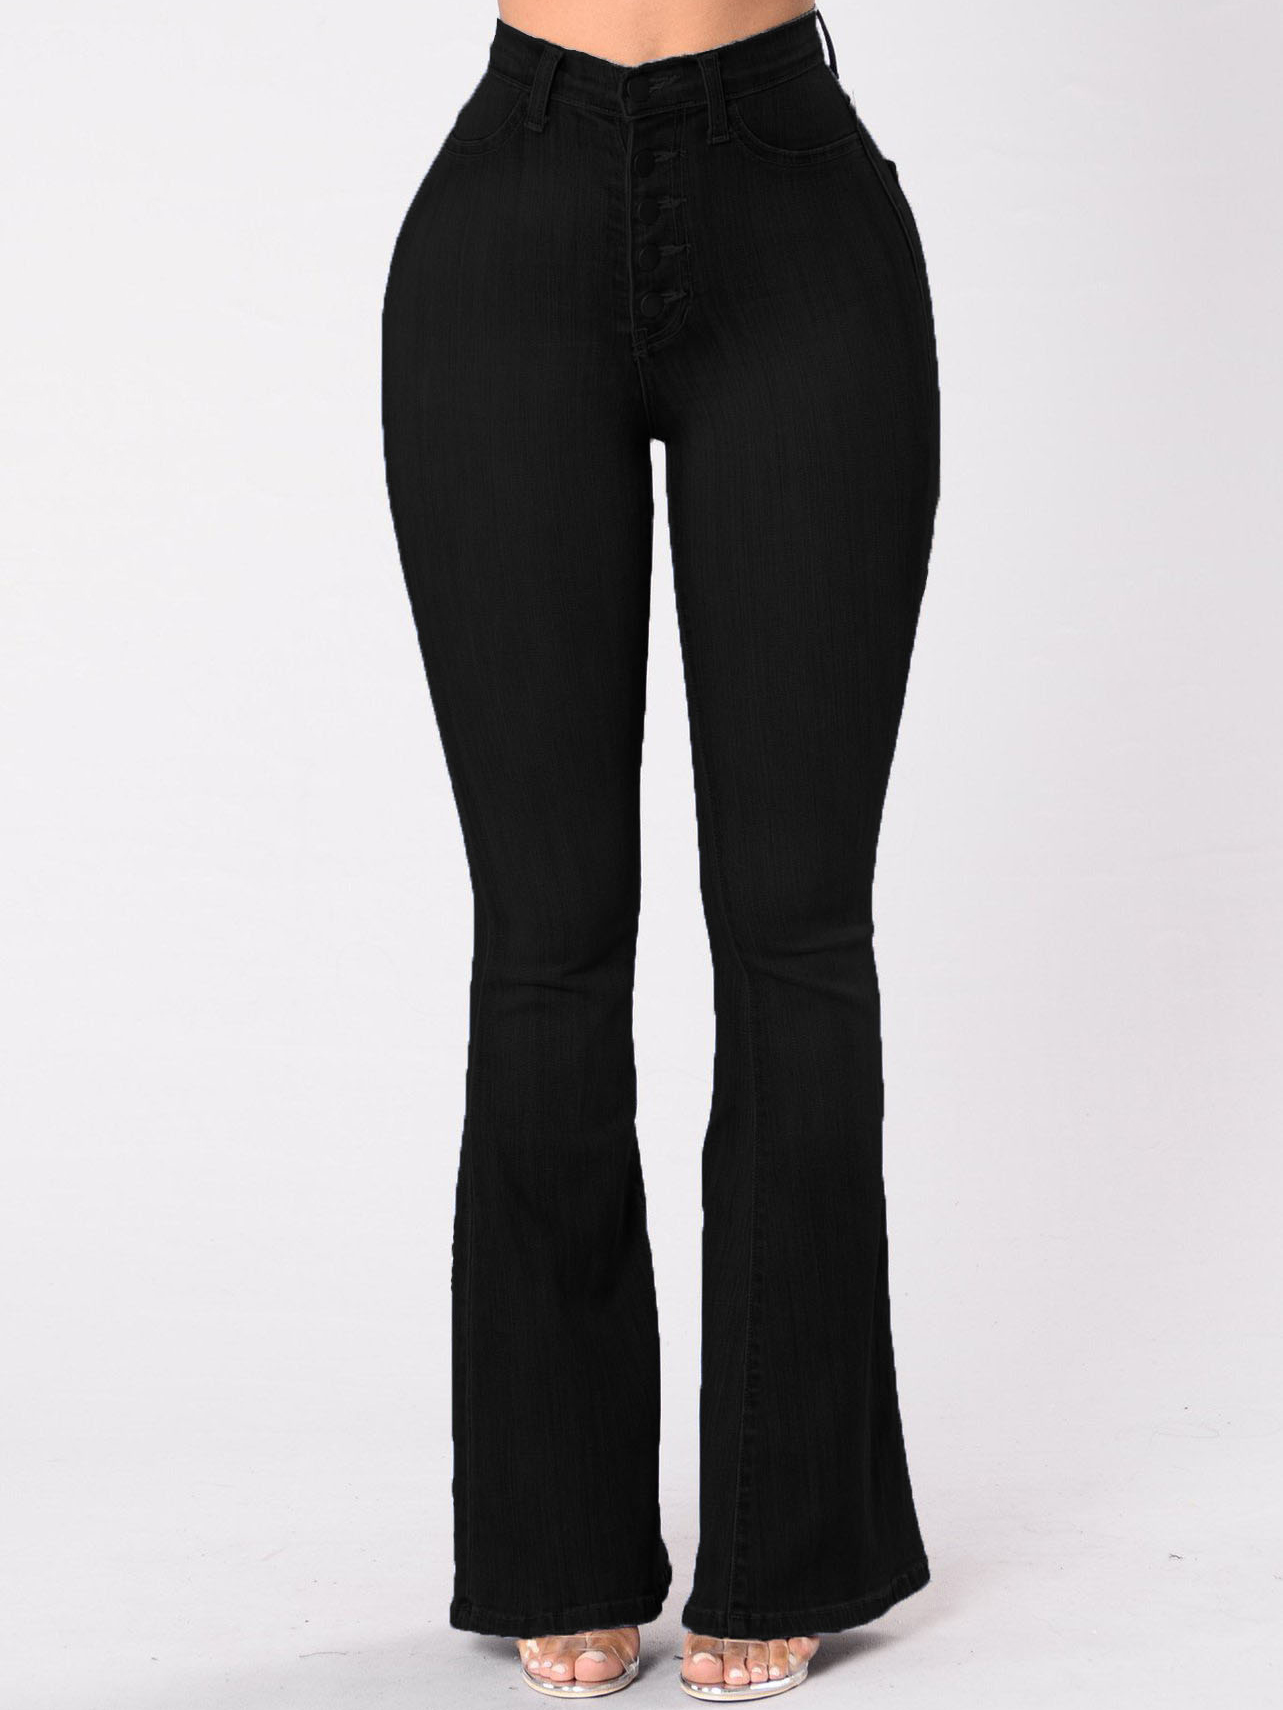 Wholesale All Black High Waist Jeans Spa121039ba